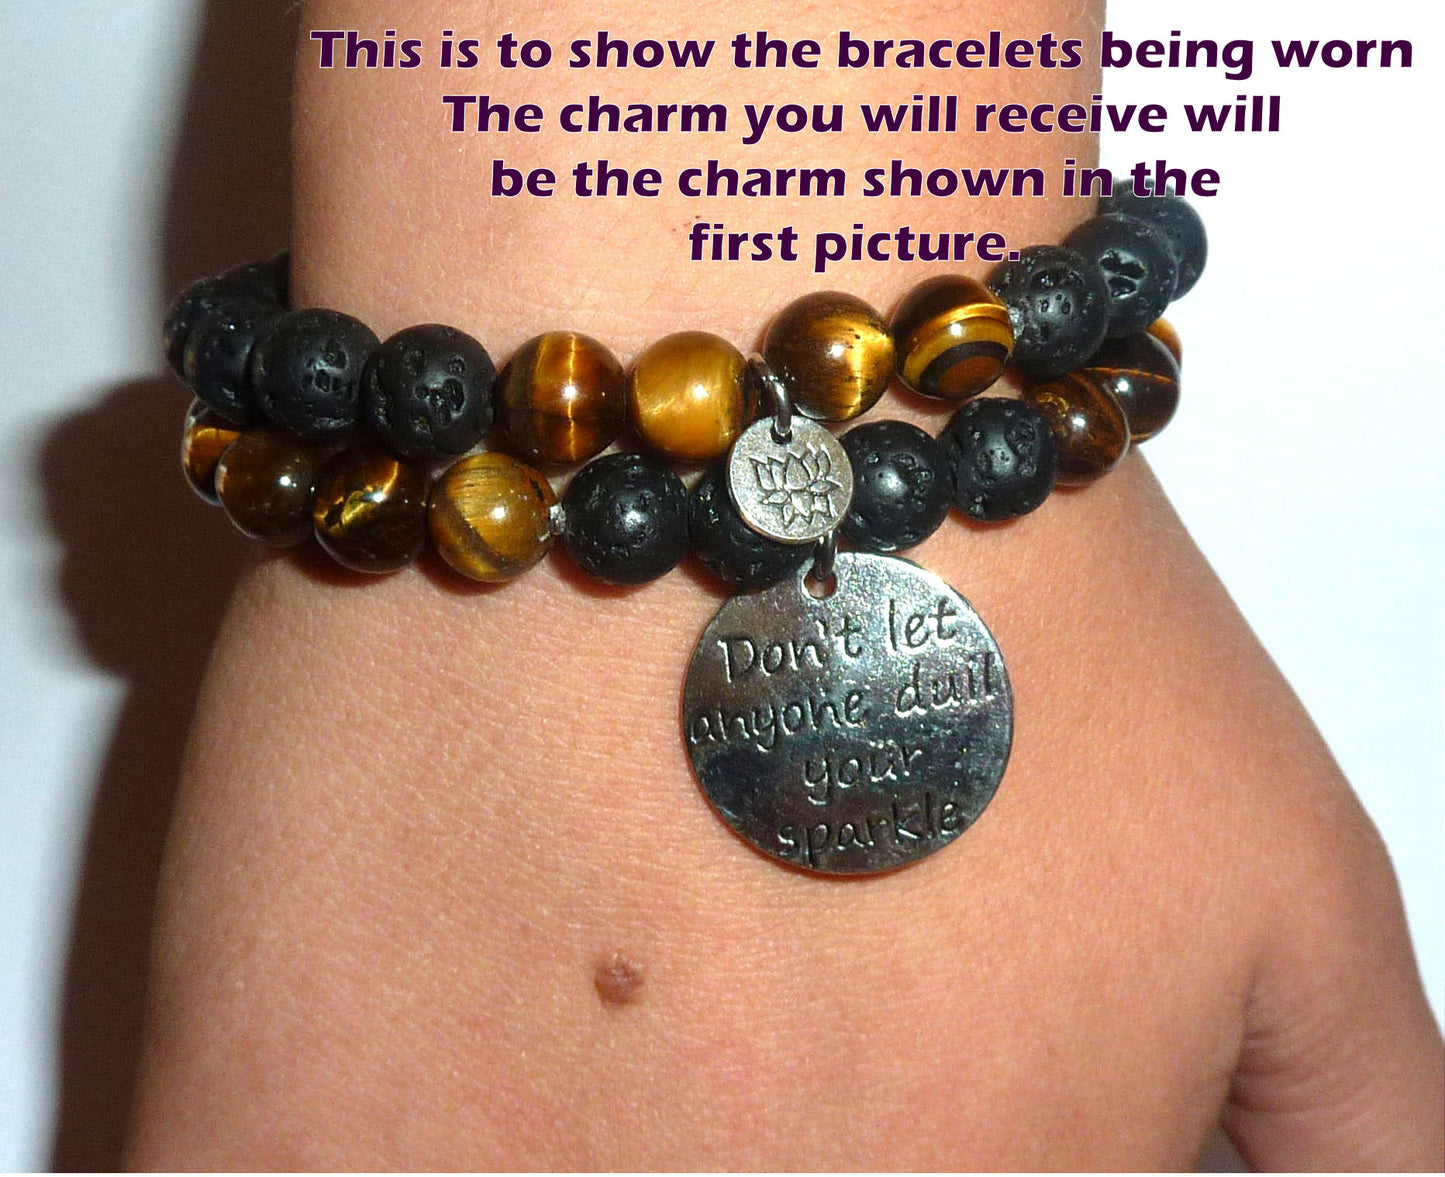 Sister of the Groom - Women's Tiger Eye & Black Lava Diffuser Yoga Beads Charm Stretch Bracelet Gift Set